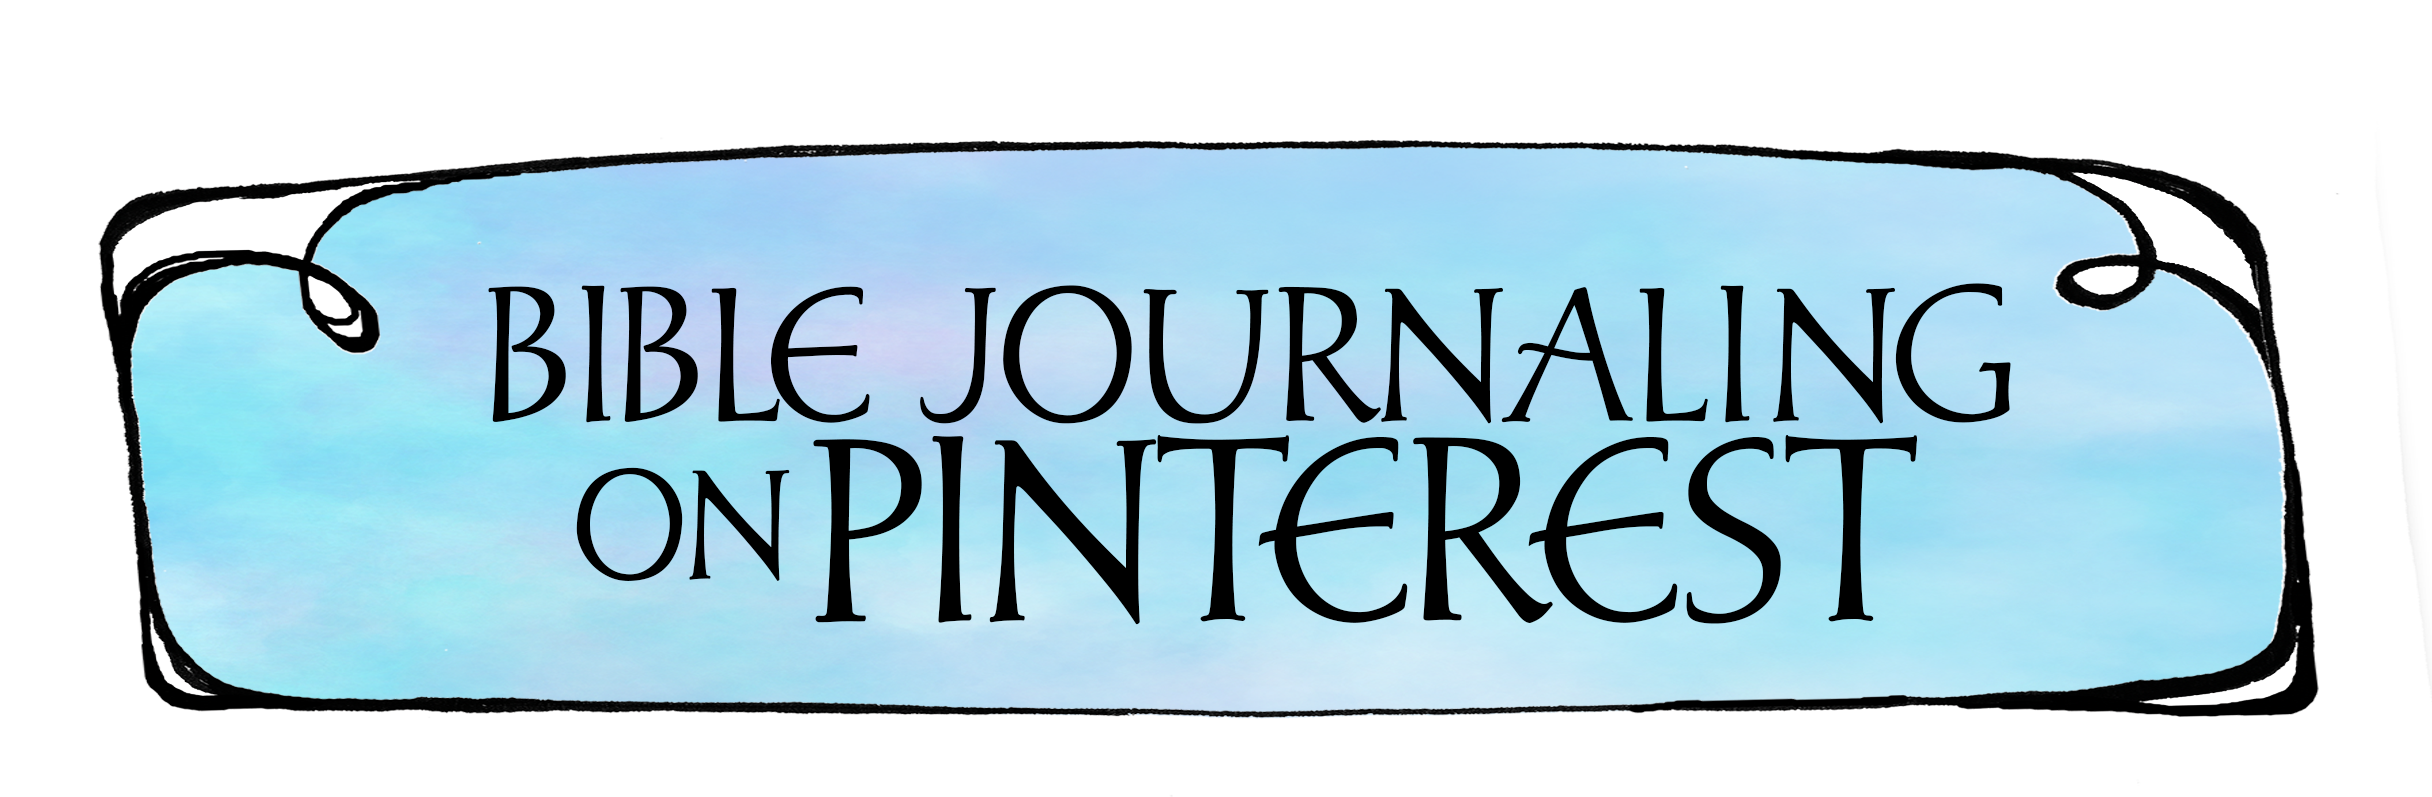 Bible Journaling Pinterest